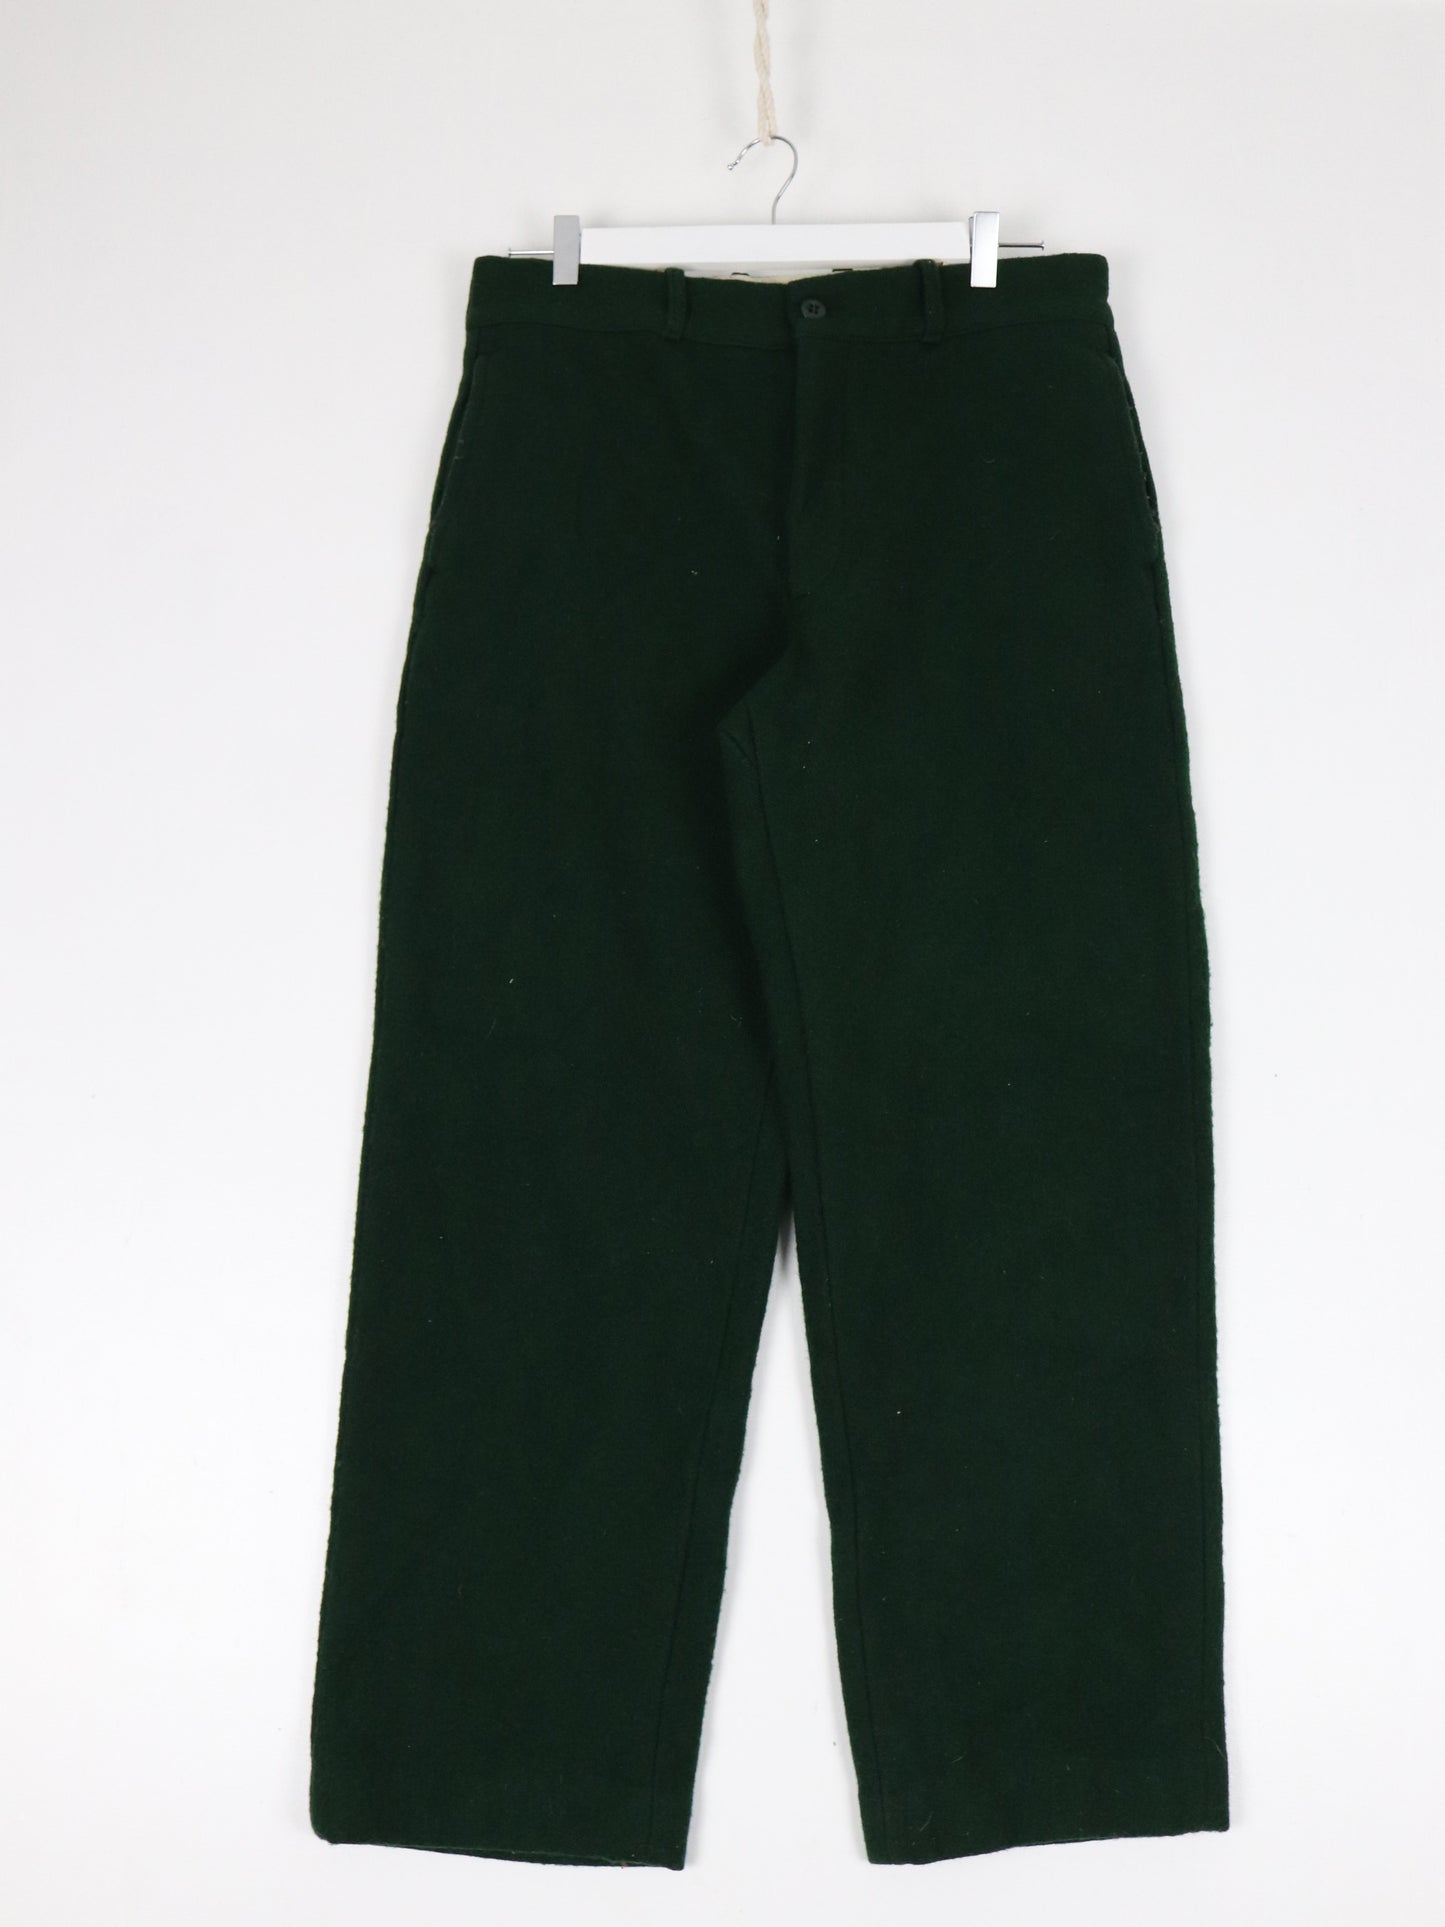 Vintage Johnson Wollen Mills Pants Mens 34 x 29 Green Wool Outdoors